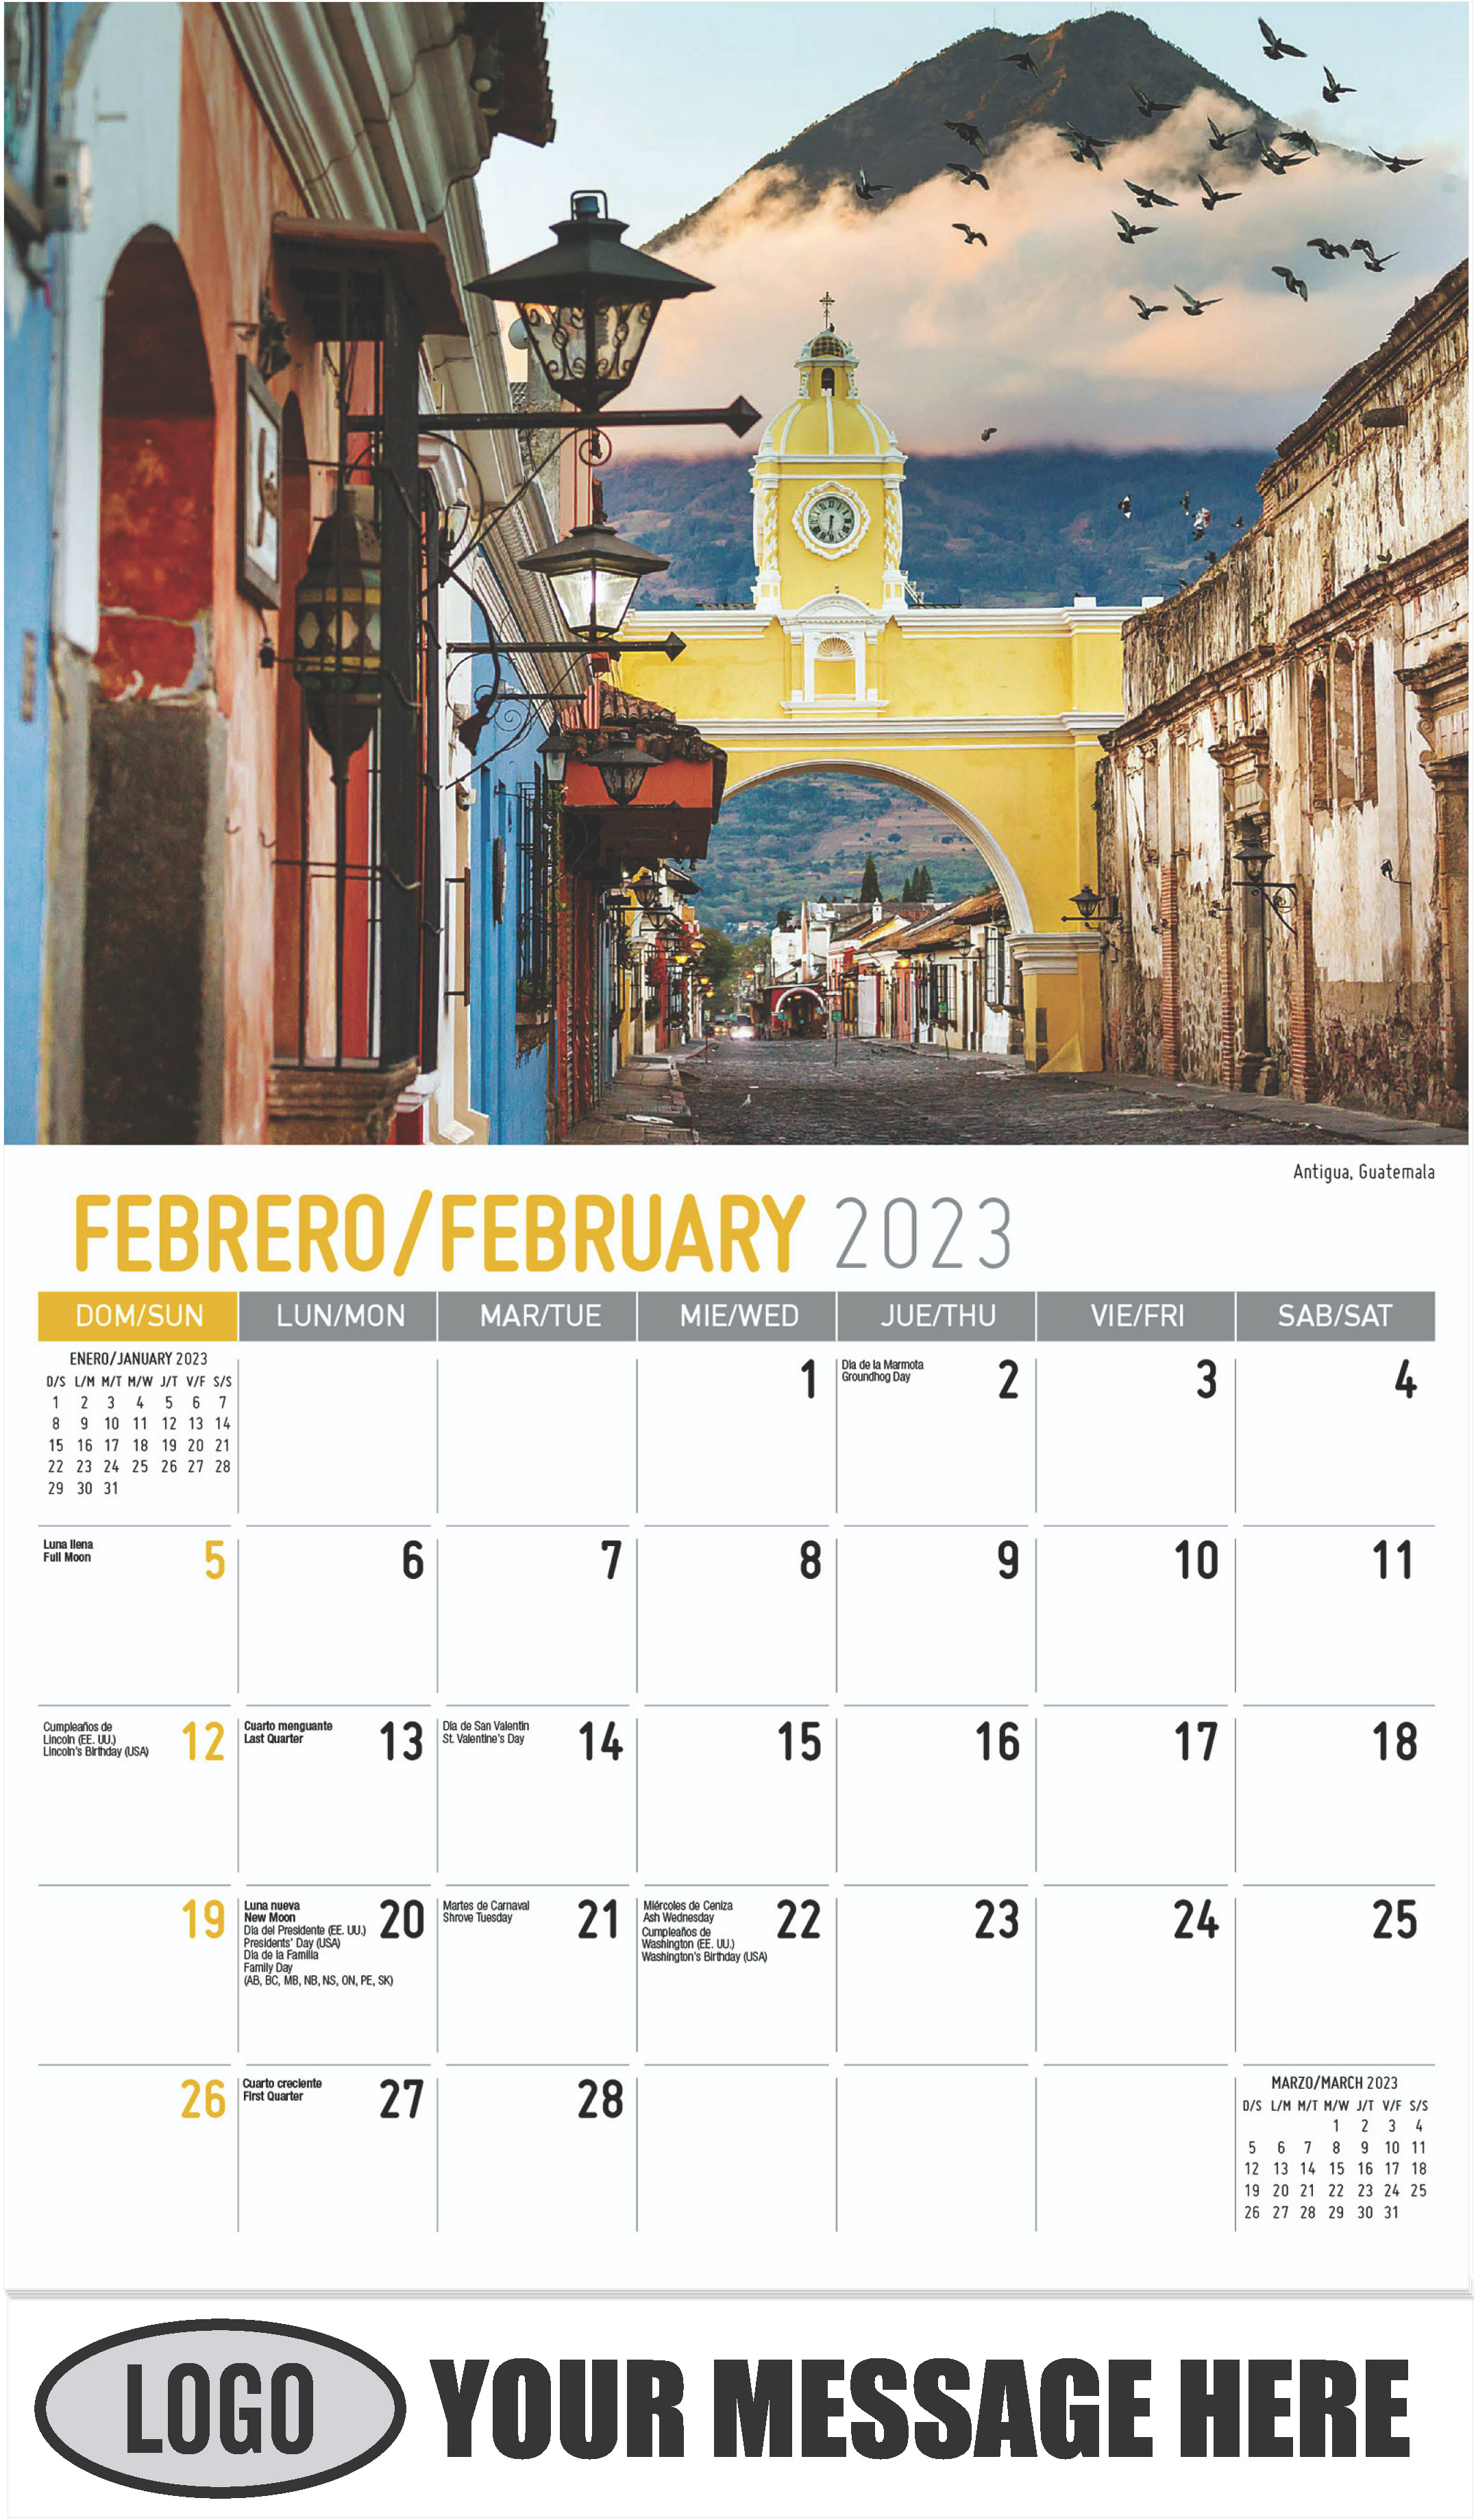 Antigua, Guatemala - February - Beauty of Latin America 2023 Promotional Calendar